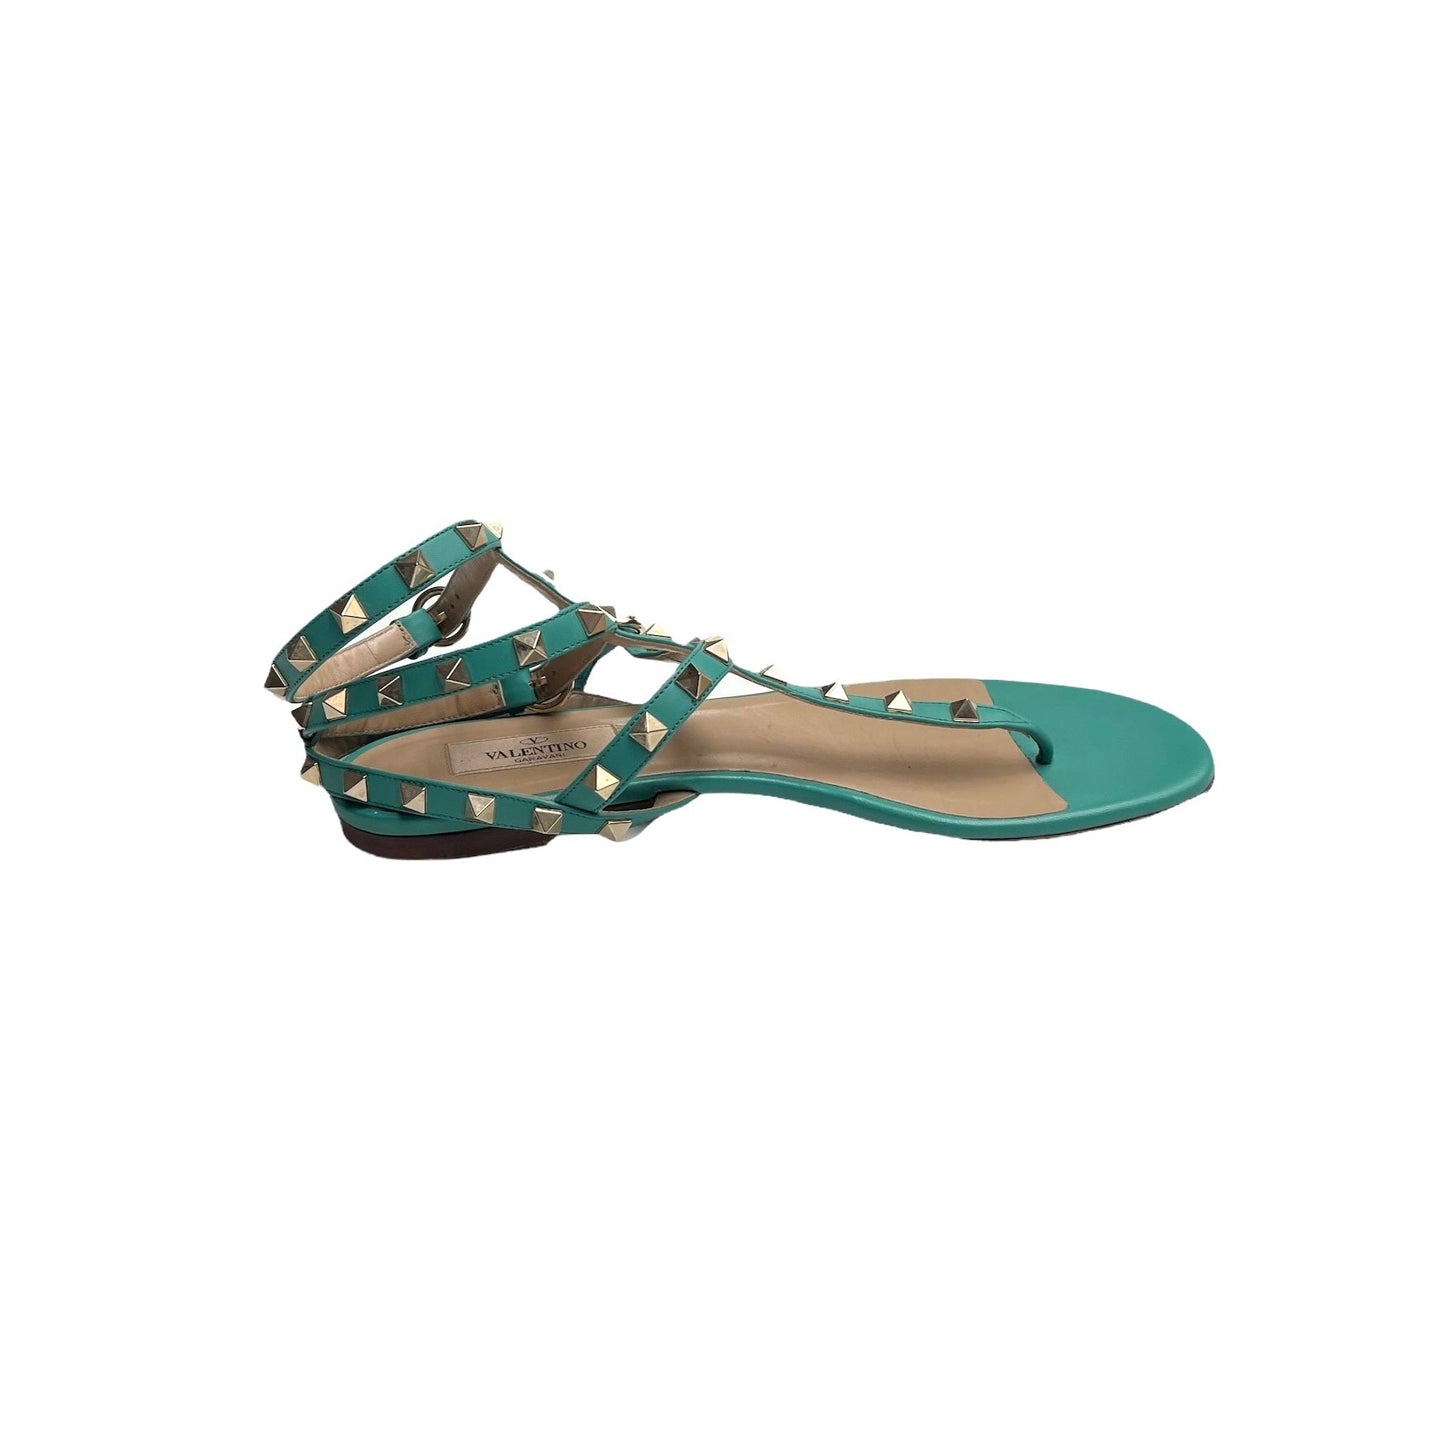 Turquoise Leather Gladiator Sandals - 8